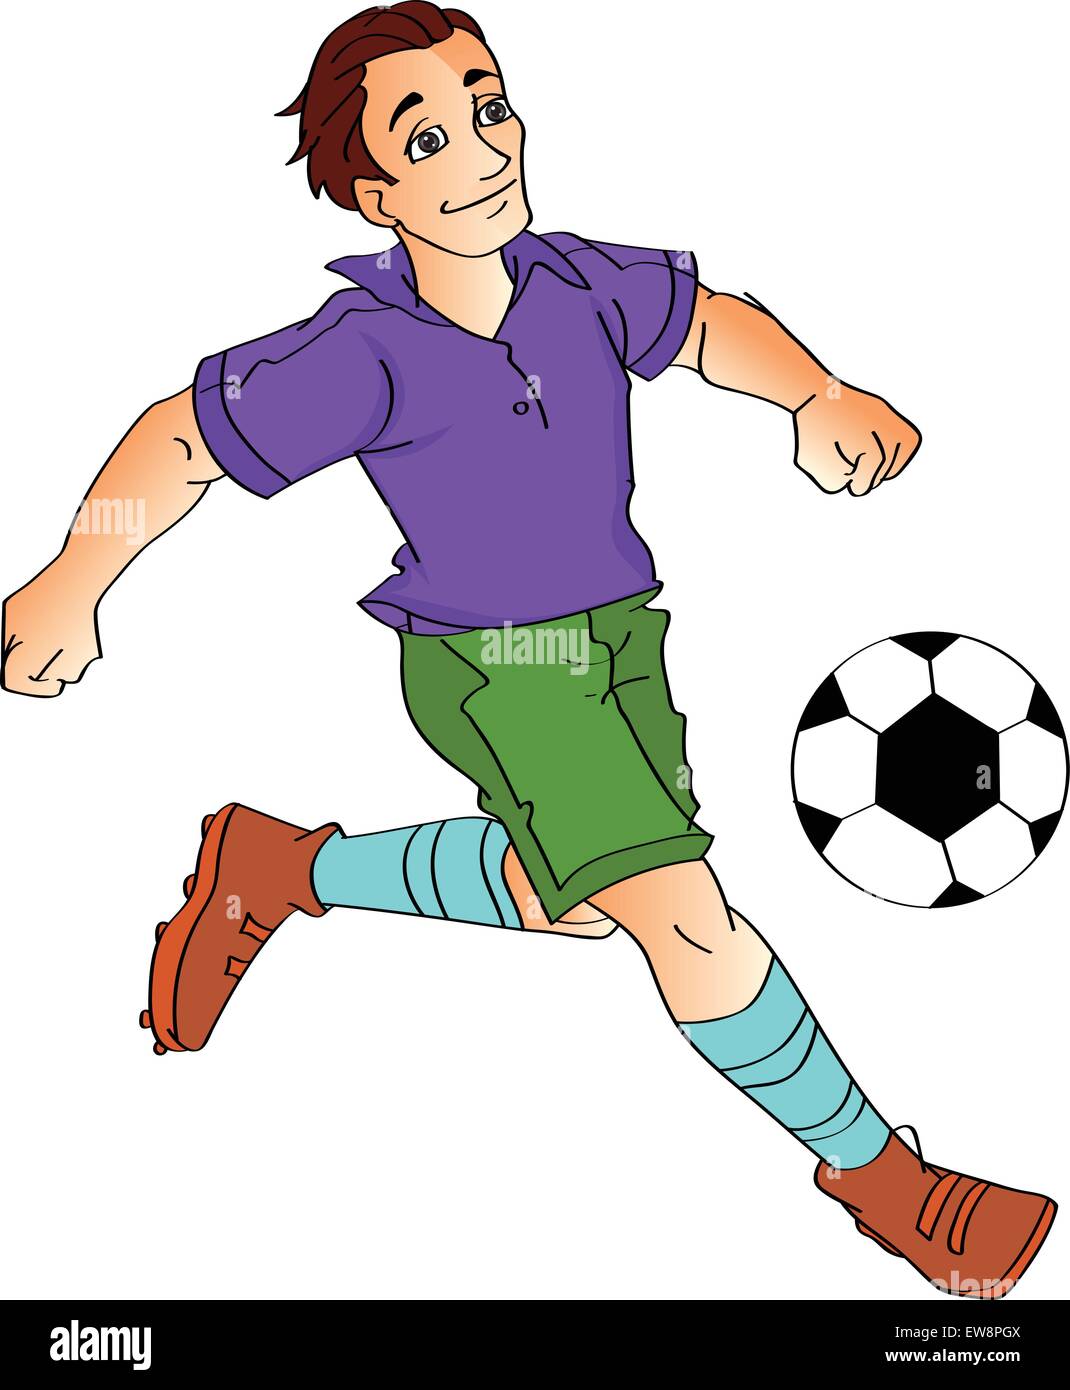 Junge Menschen spielen Fußball, Vektor-illustration Stock Vektor